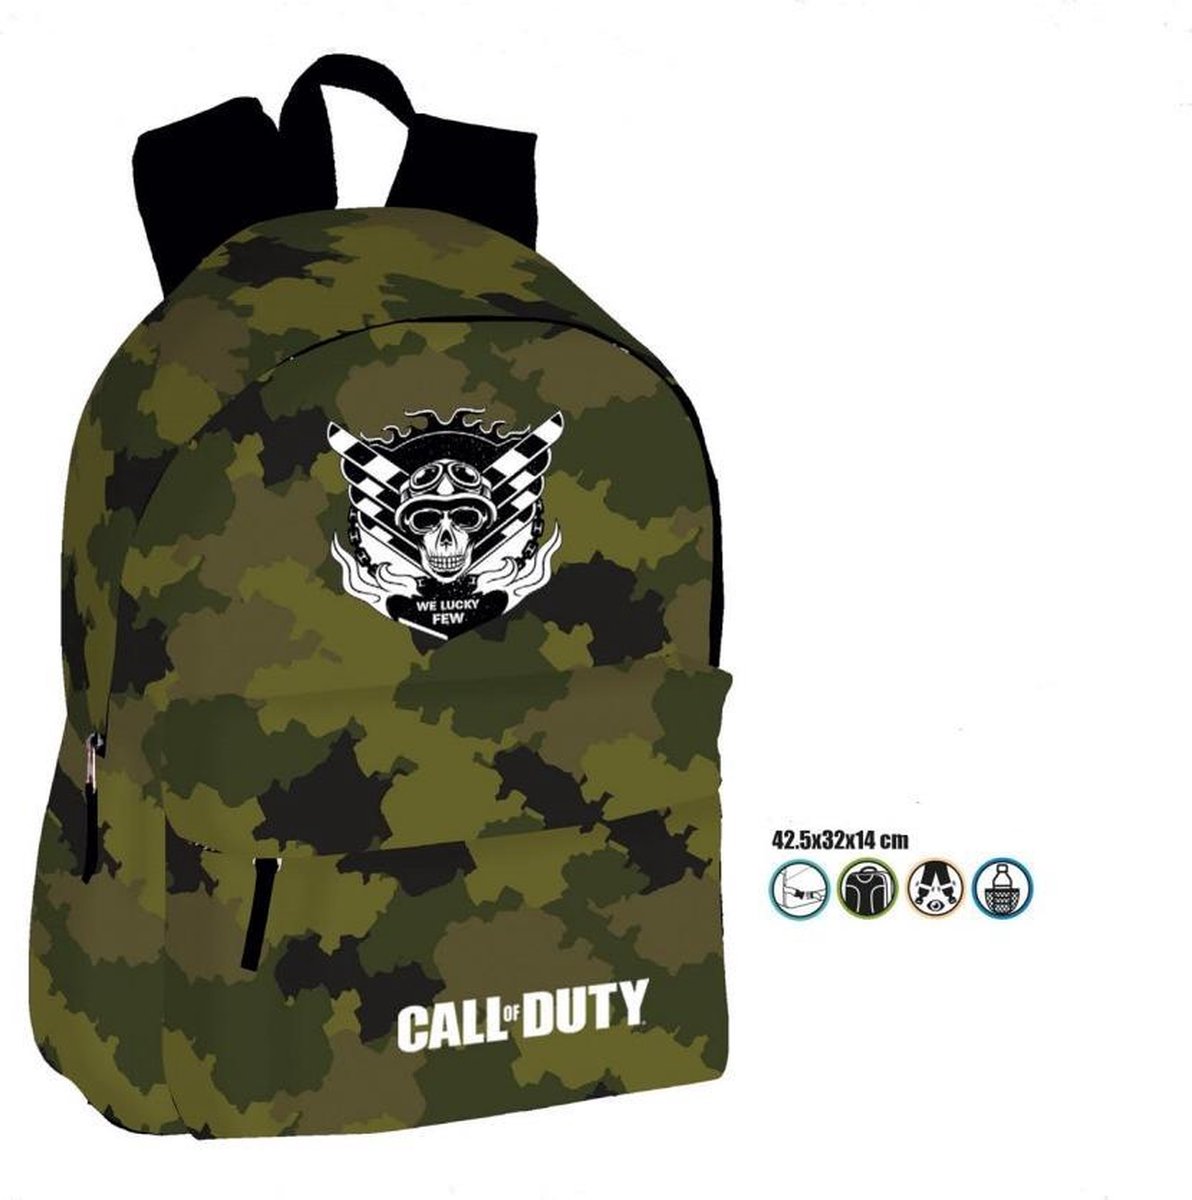 Call of Duty rugzak 43 cm Black ops / Camouflage rugzak